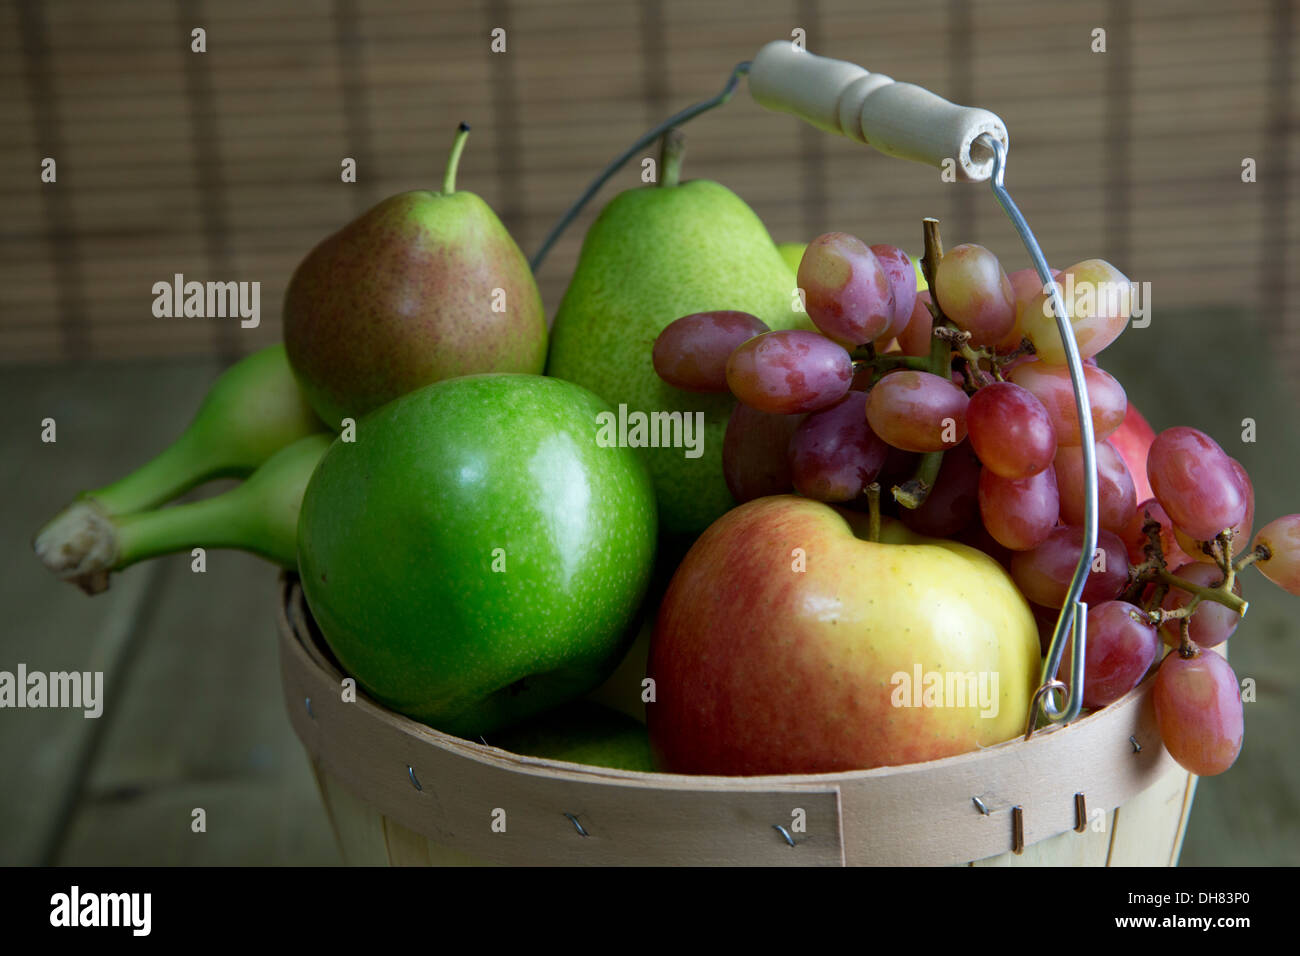 Fruits basket Apple pear Banana grapes Stock Photo